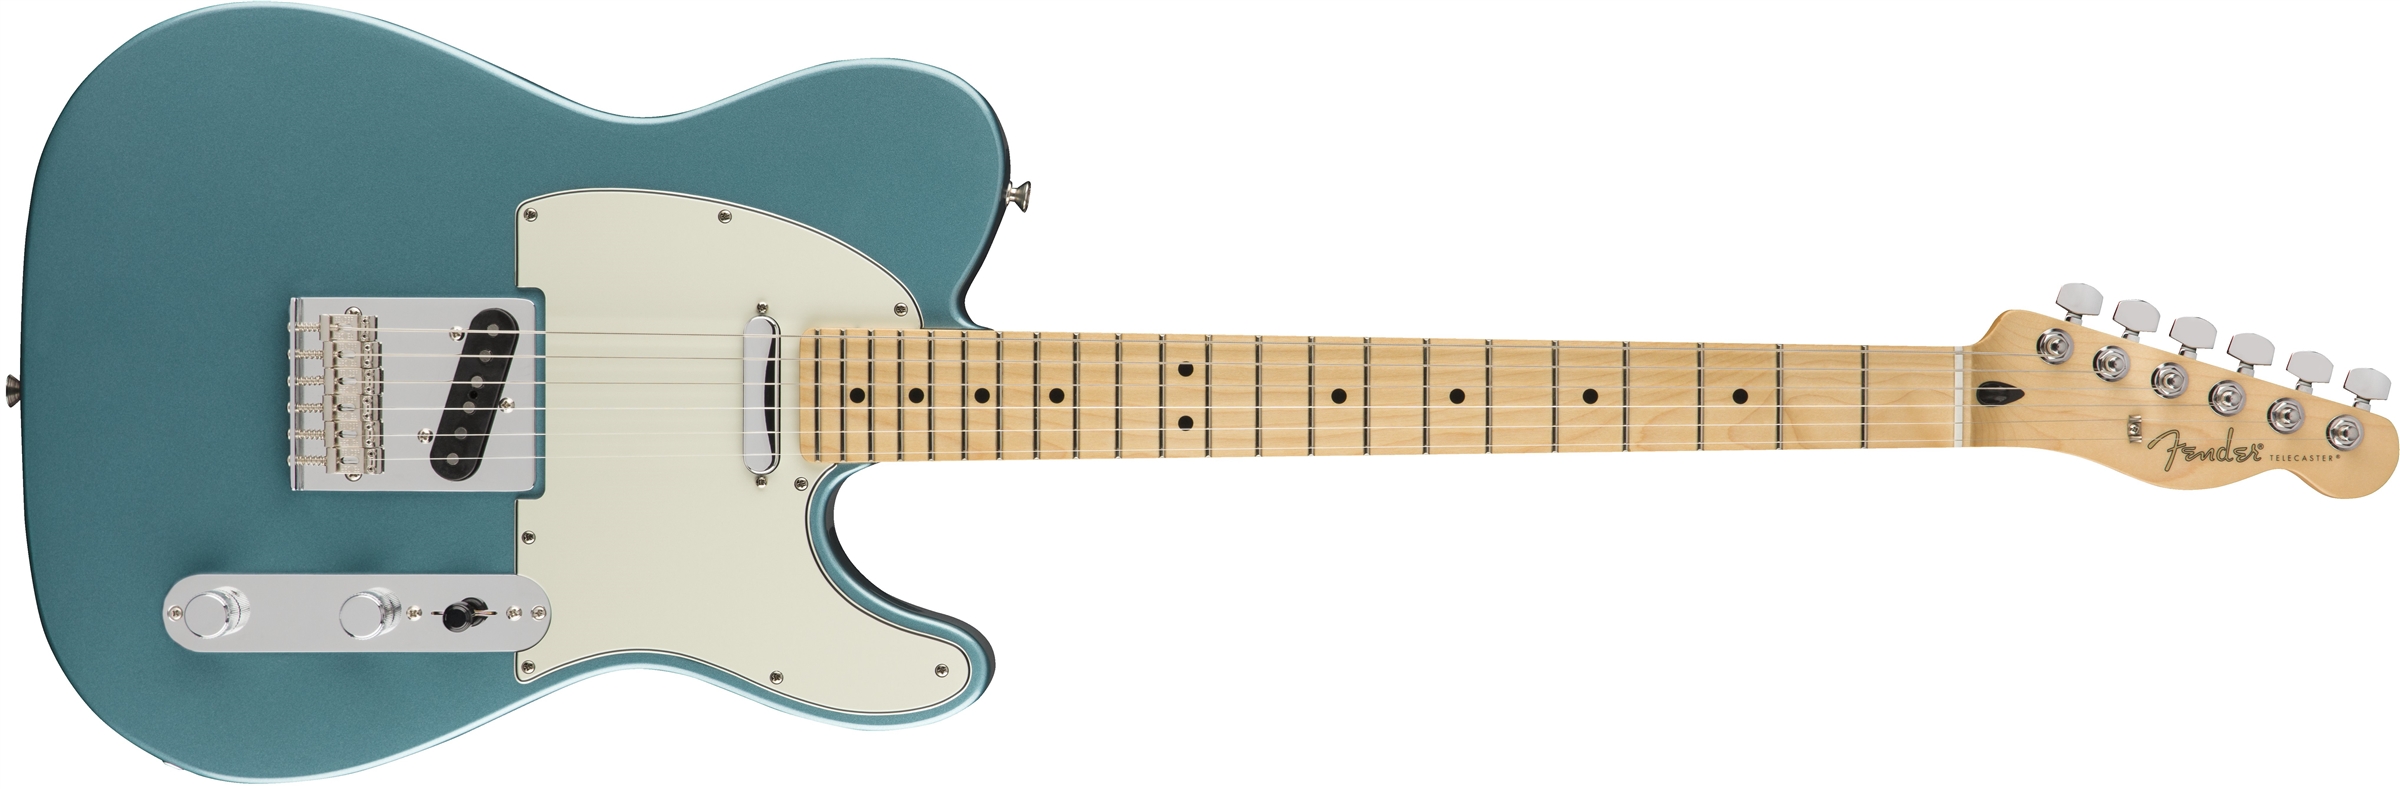 Fender Tele Player Mex Mn - Tidepool - Televorm elektrische gitaar - Variation 1